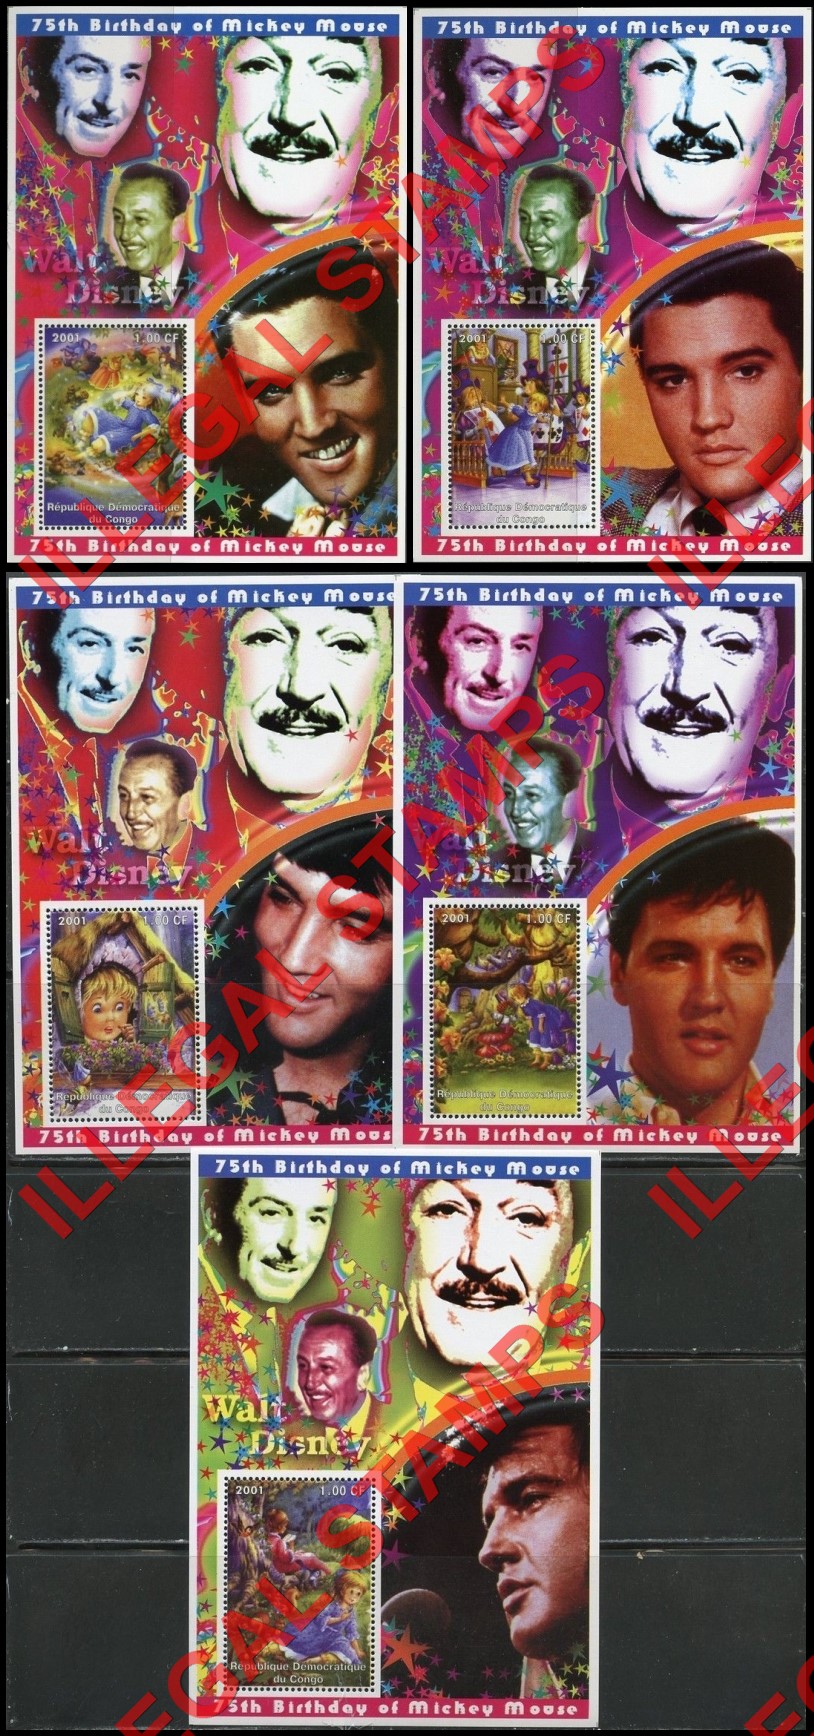 Congo Democratic Republic 2001 Alice in Wonderland with Elvis Presley and Walt Disney Illegal Stamp Souvenir Sheets of 1 (Part 2)